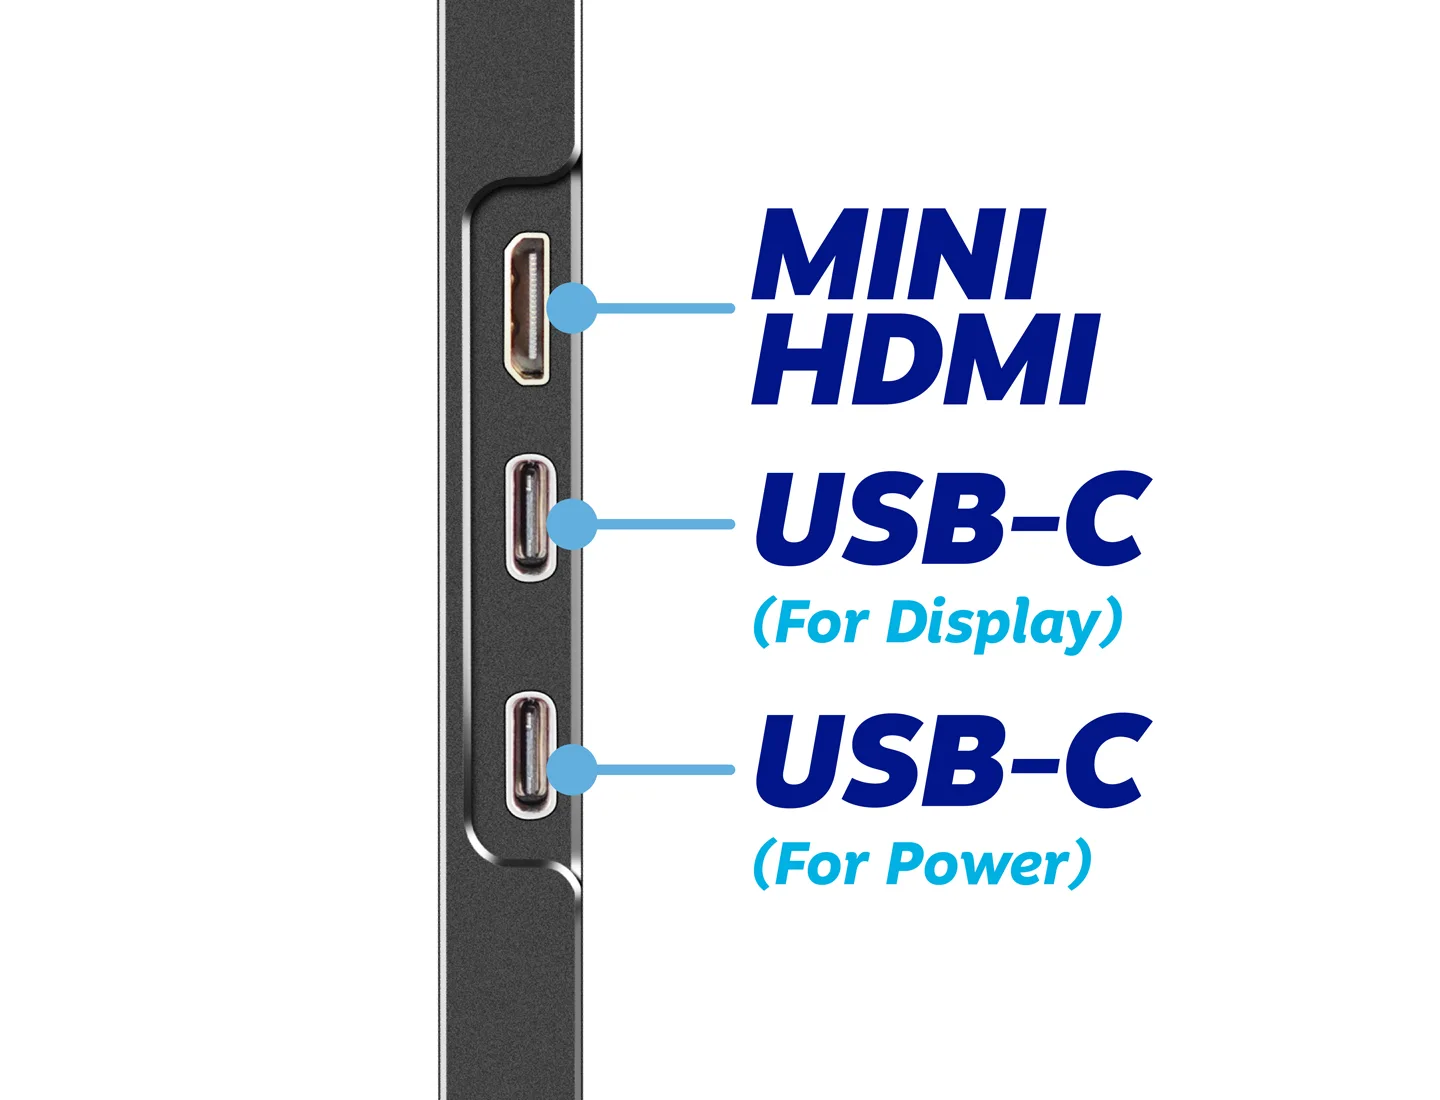 Mini HDMI, USB-C for power, USB-C for display